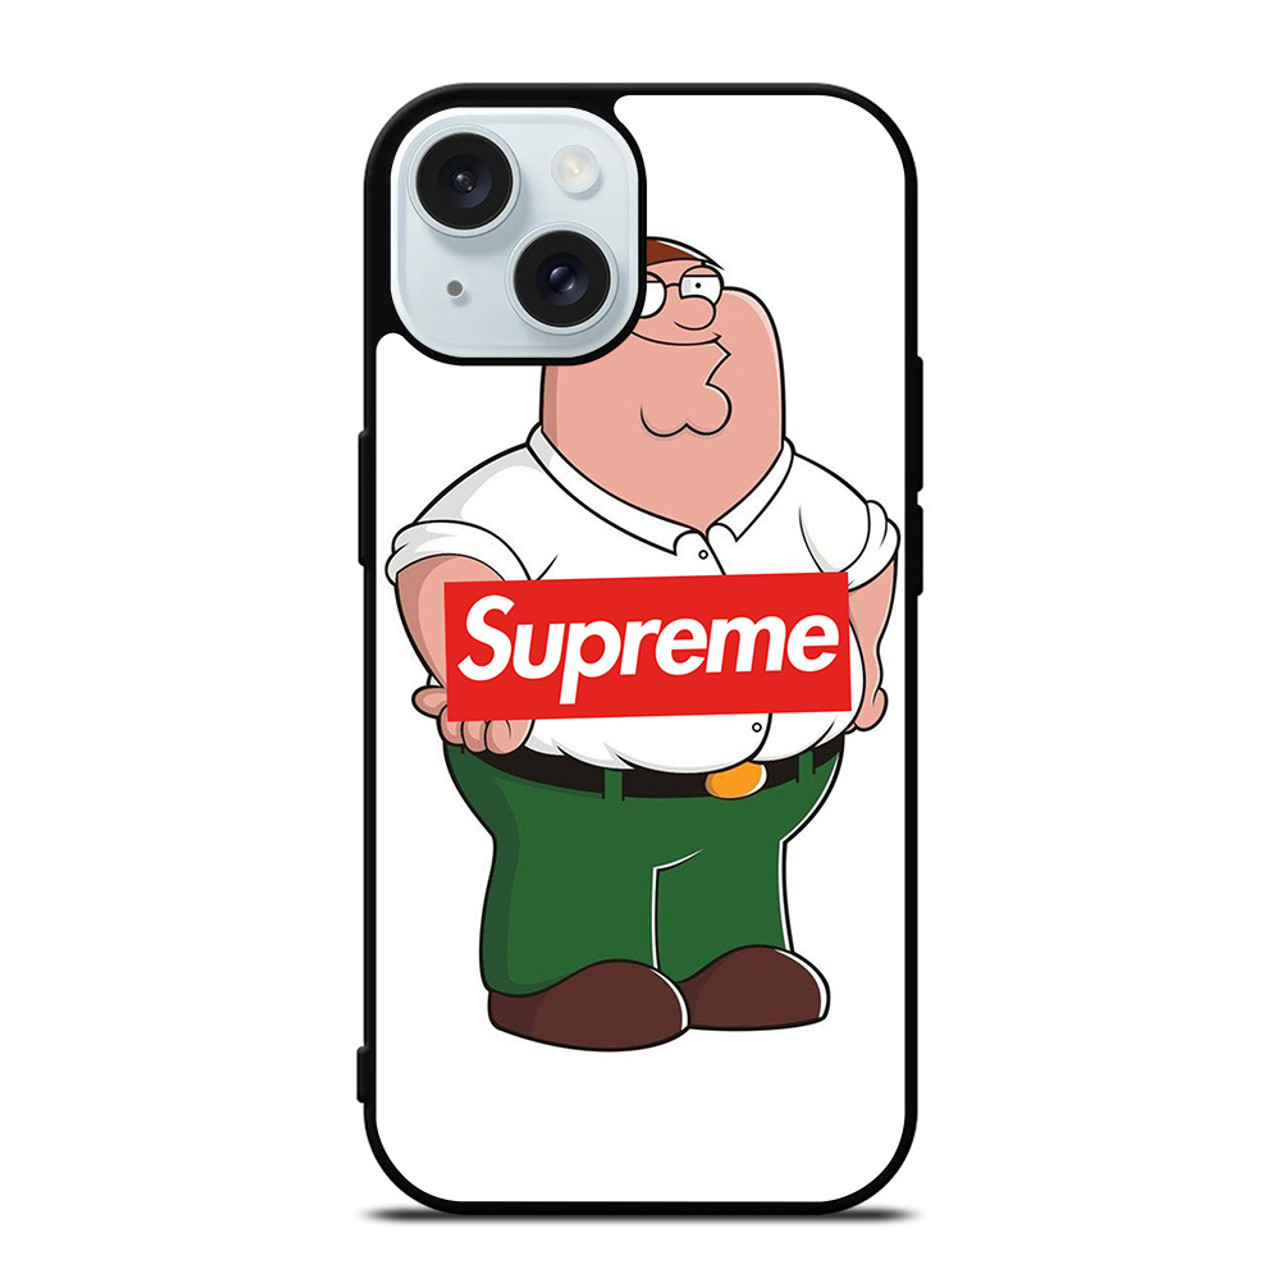 Supreme Fun iPhone XS Case